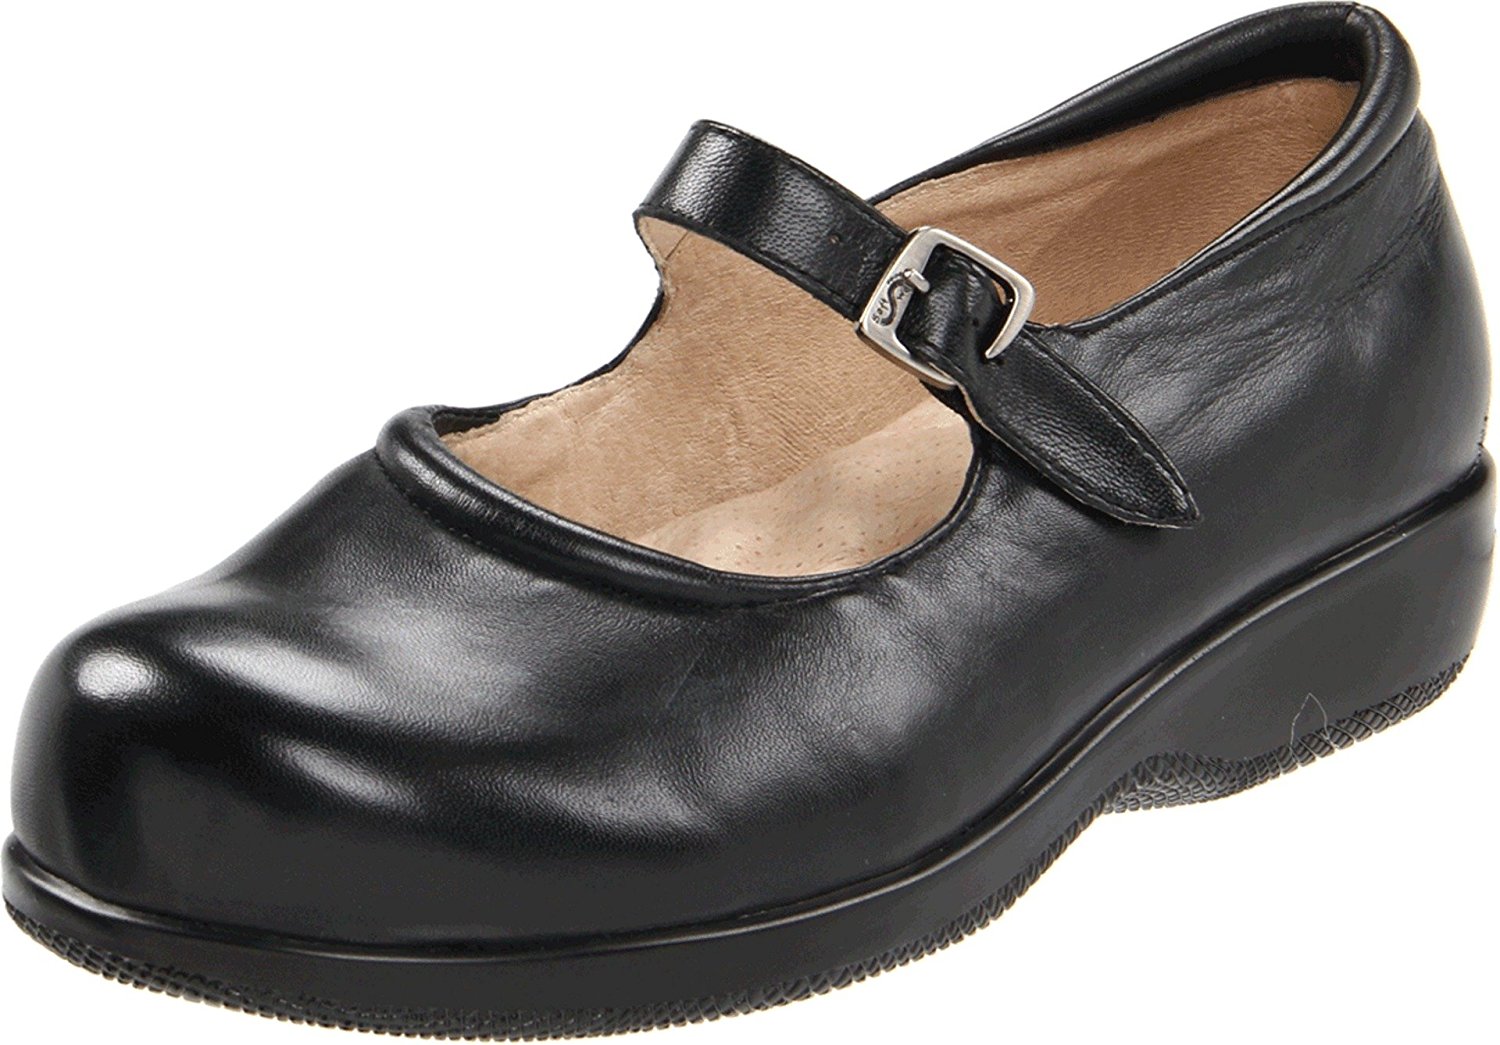 SoftWalk Womens Jupiter Round Toe Ankle Strap Clogs, Black, Size 5.0 | eBay